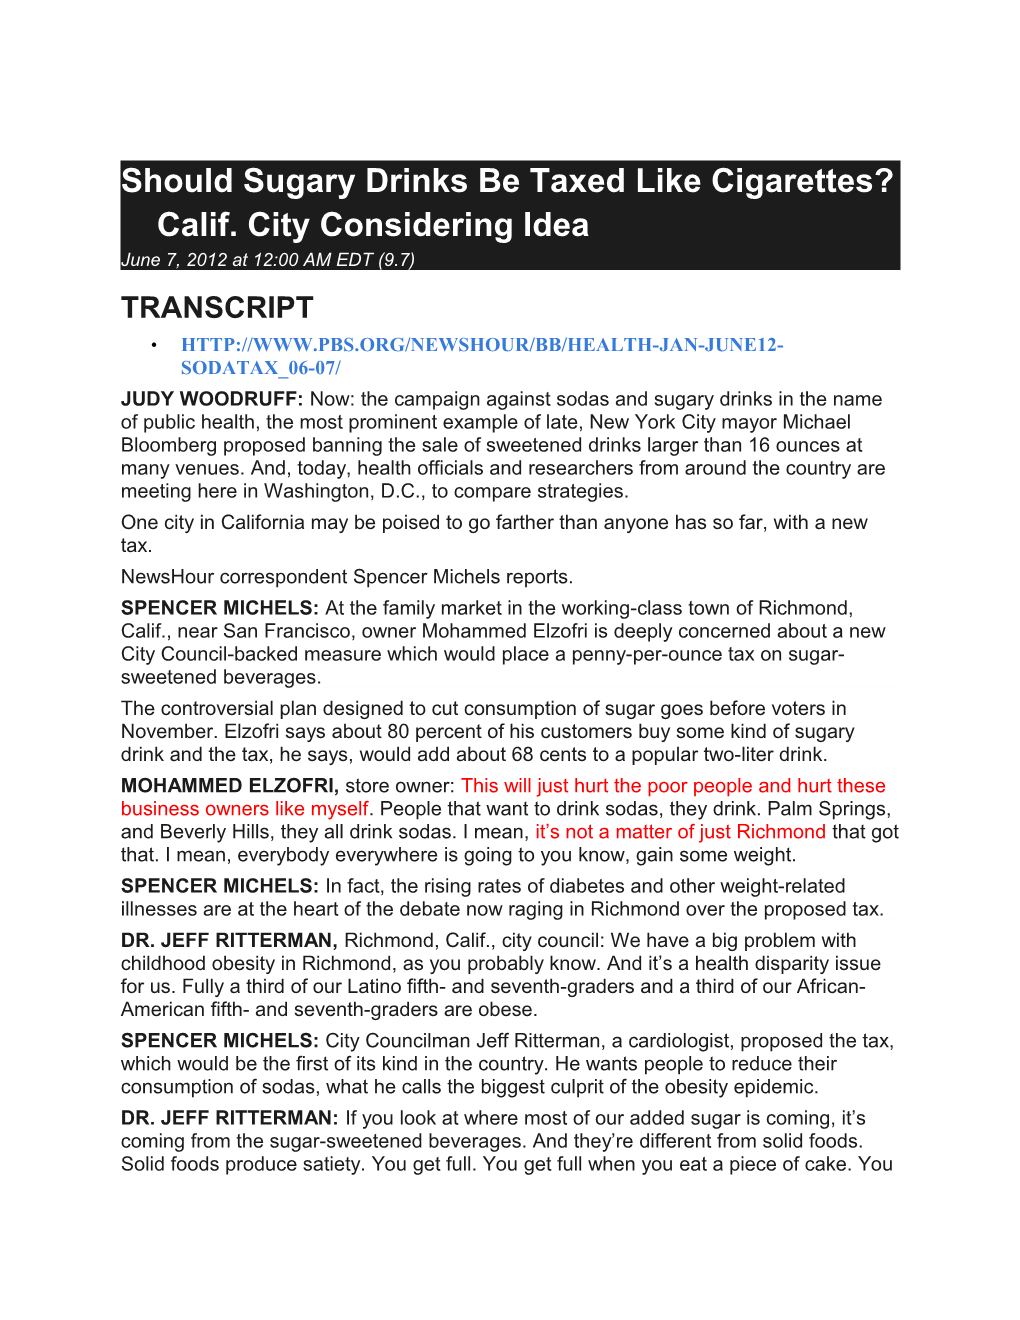 Should Sugary Drinks Be Taxed Like Cigarettes? Calif. City Considering Idea